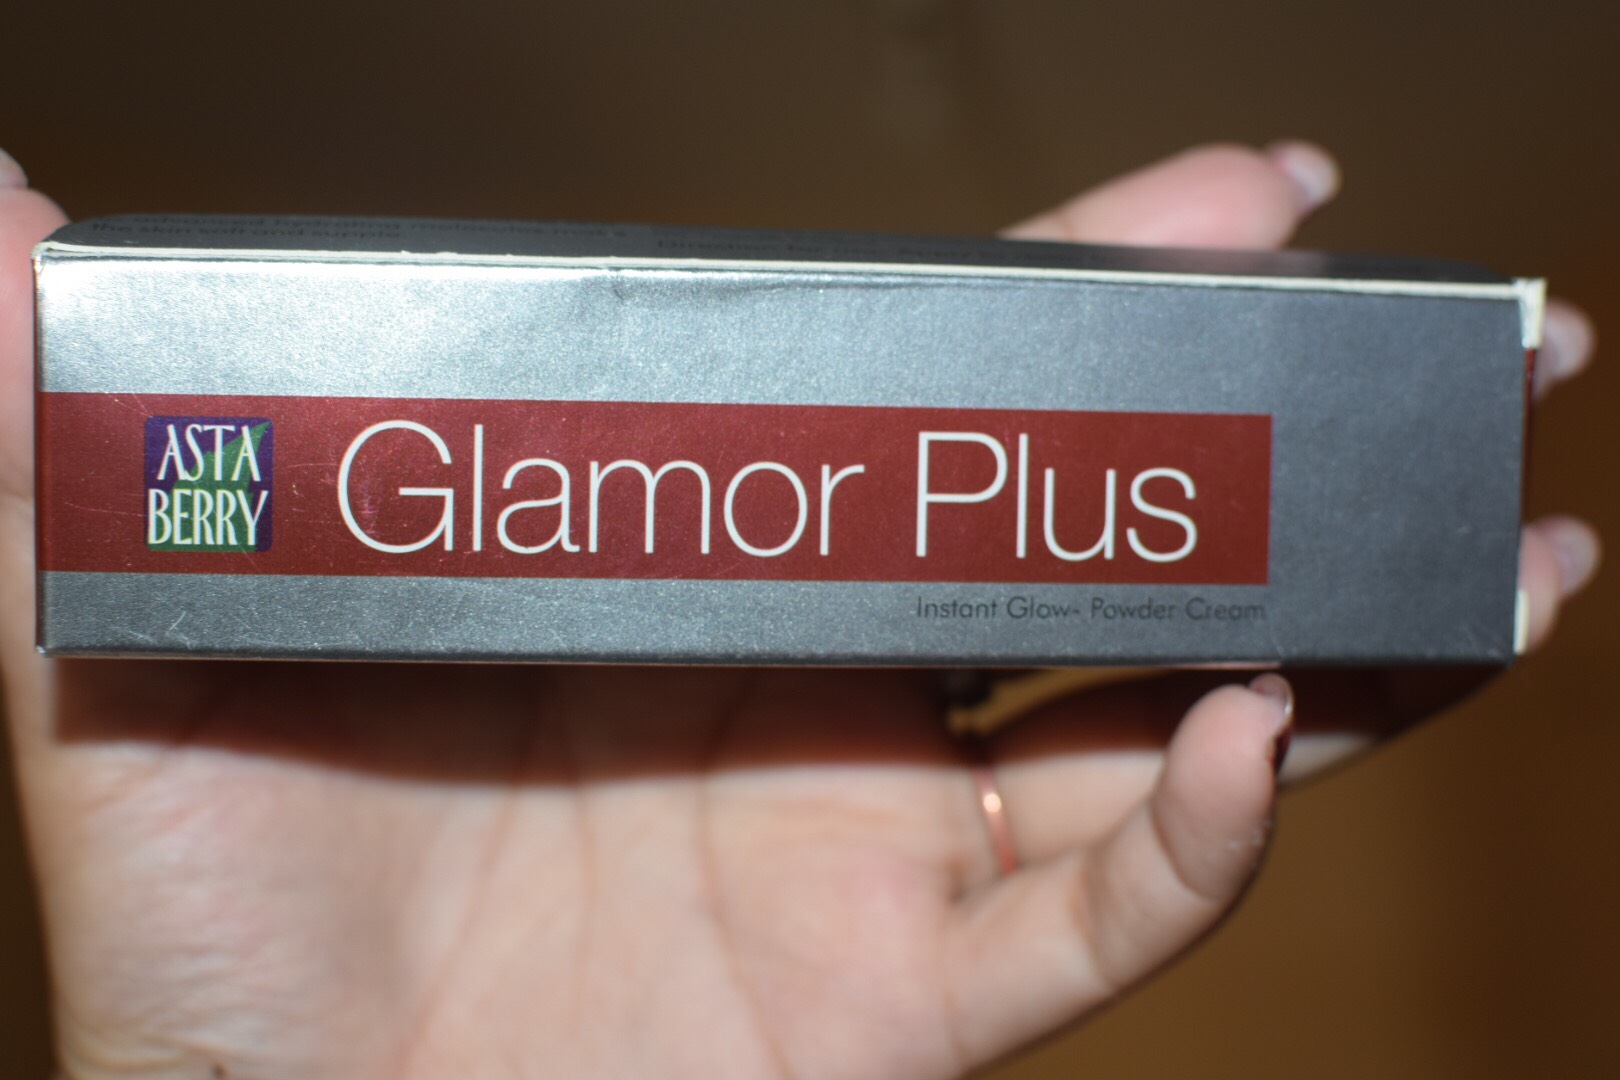 Astaberry Glamor Plus Instant Glow Powder Cream Review